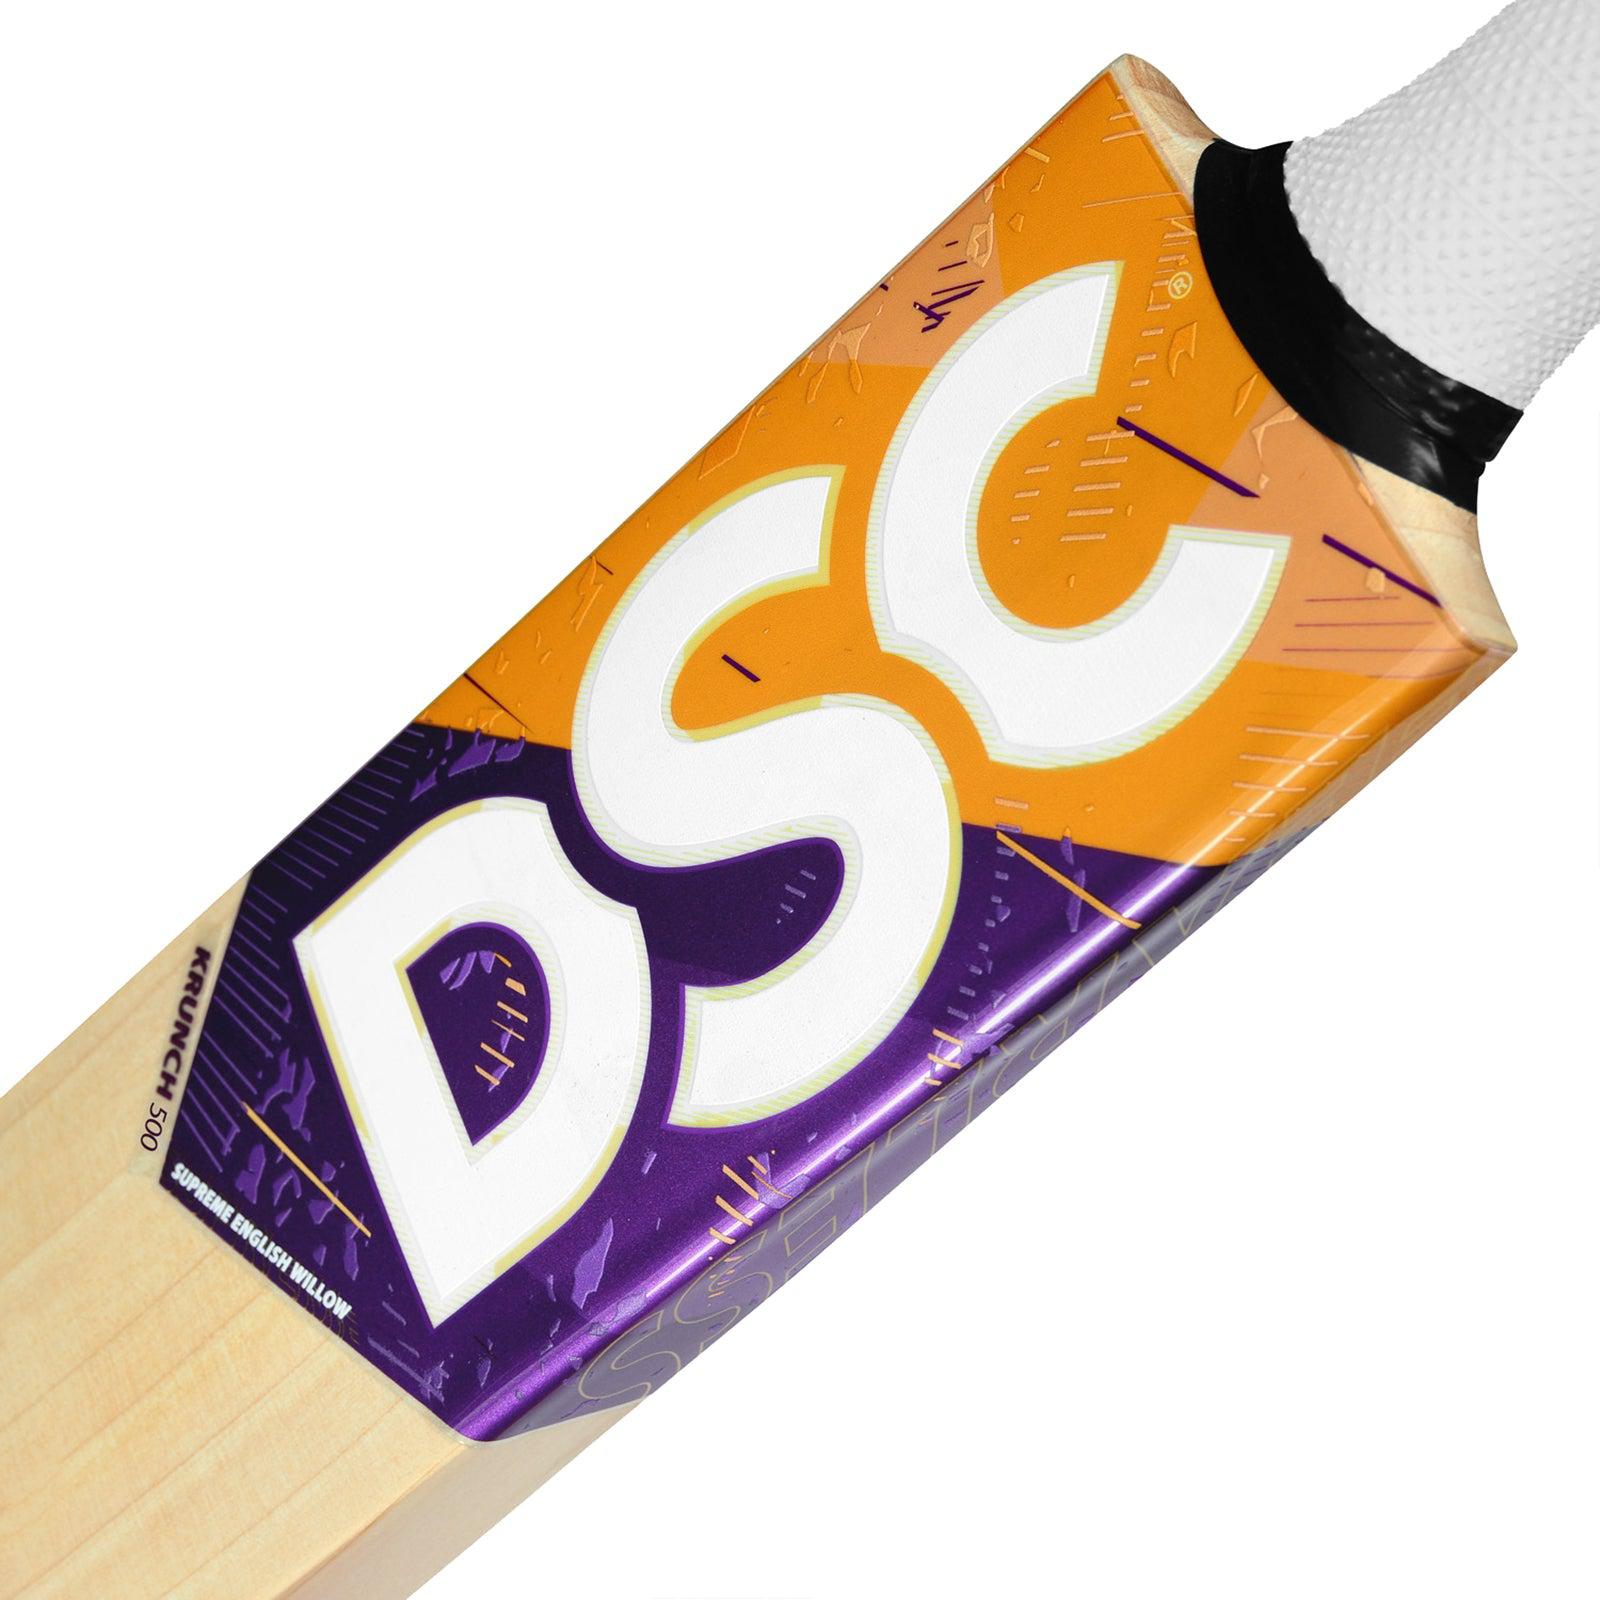 DSC Krunch 500 Cricket Bat - Senior Long Blade